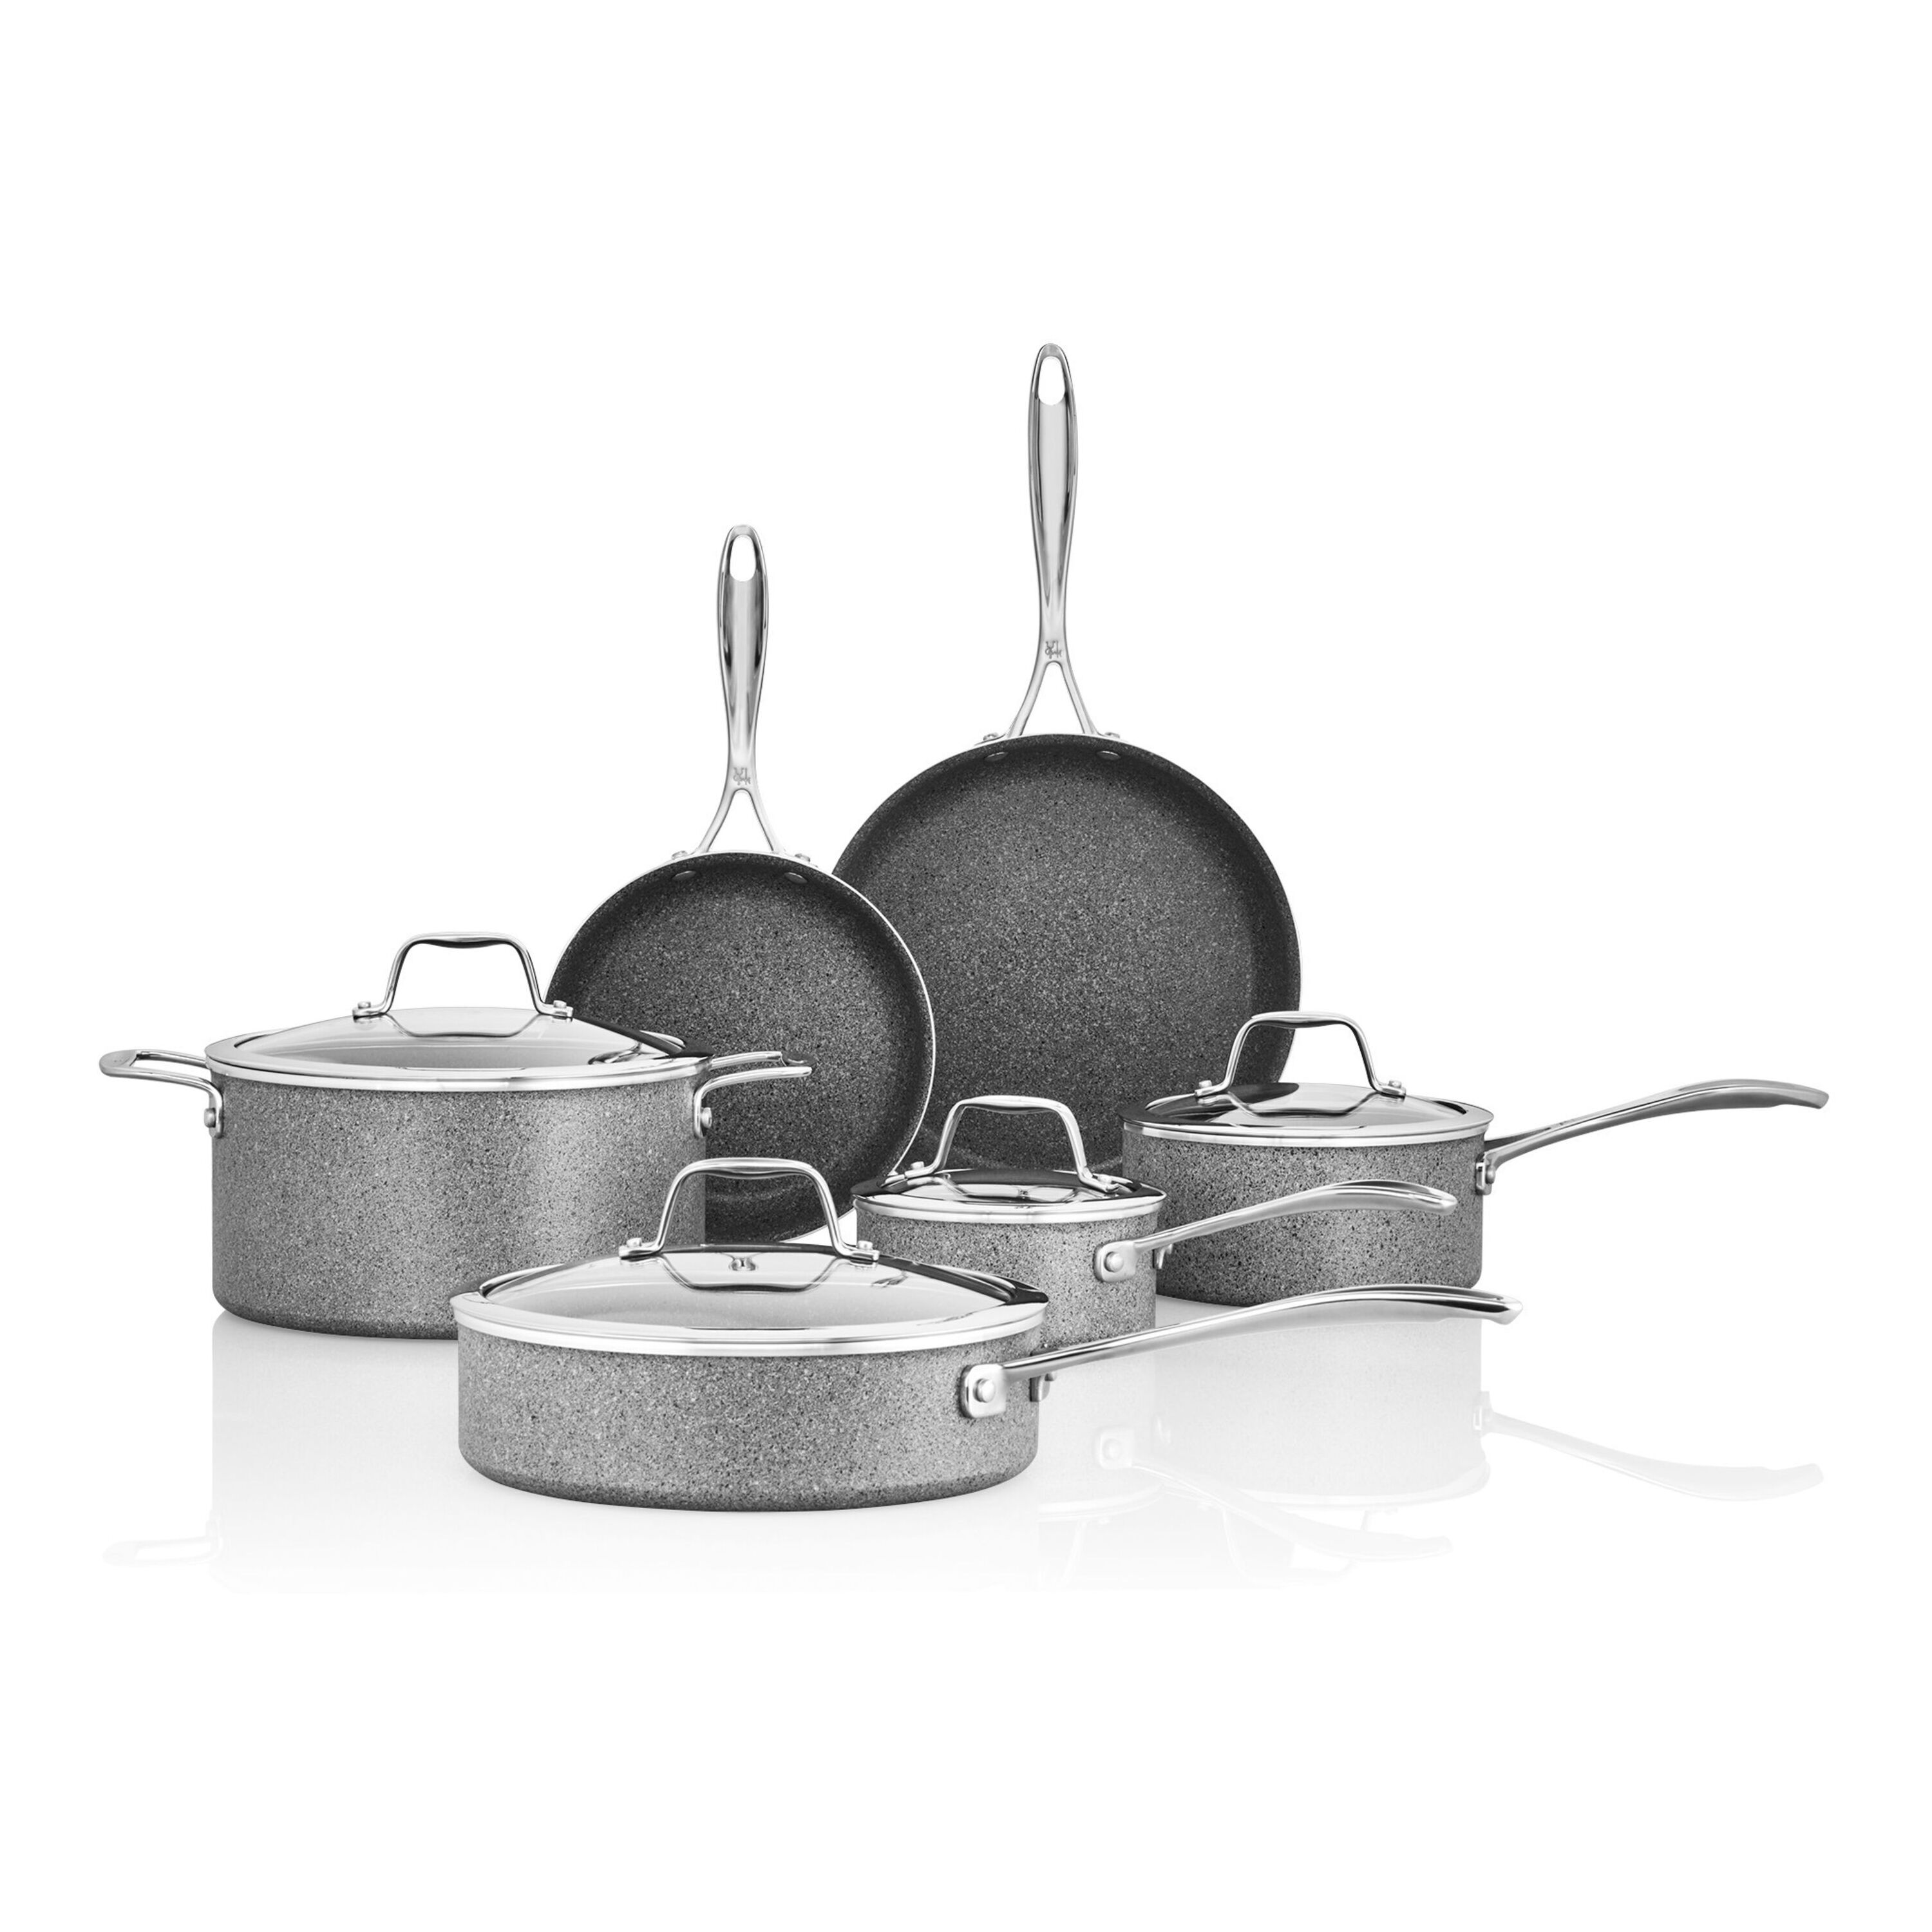 Henckels Non Stick Aluminum 3 Piece Frying Pan Set & Reviews